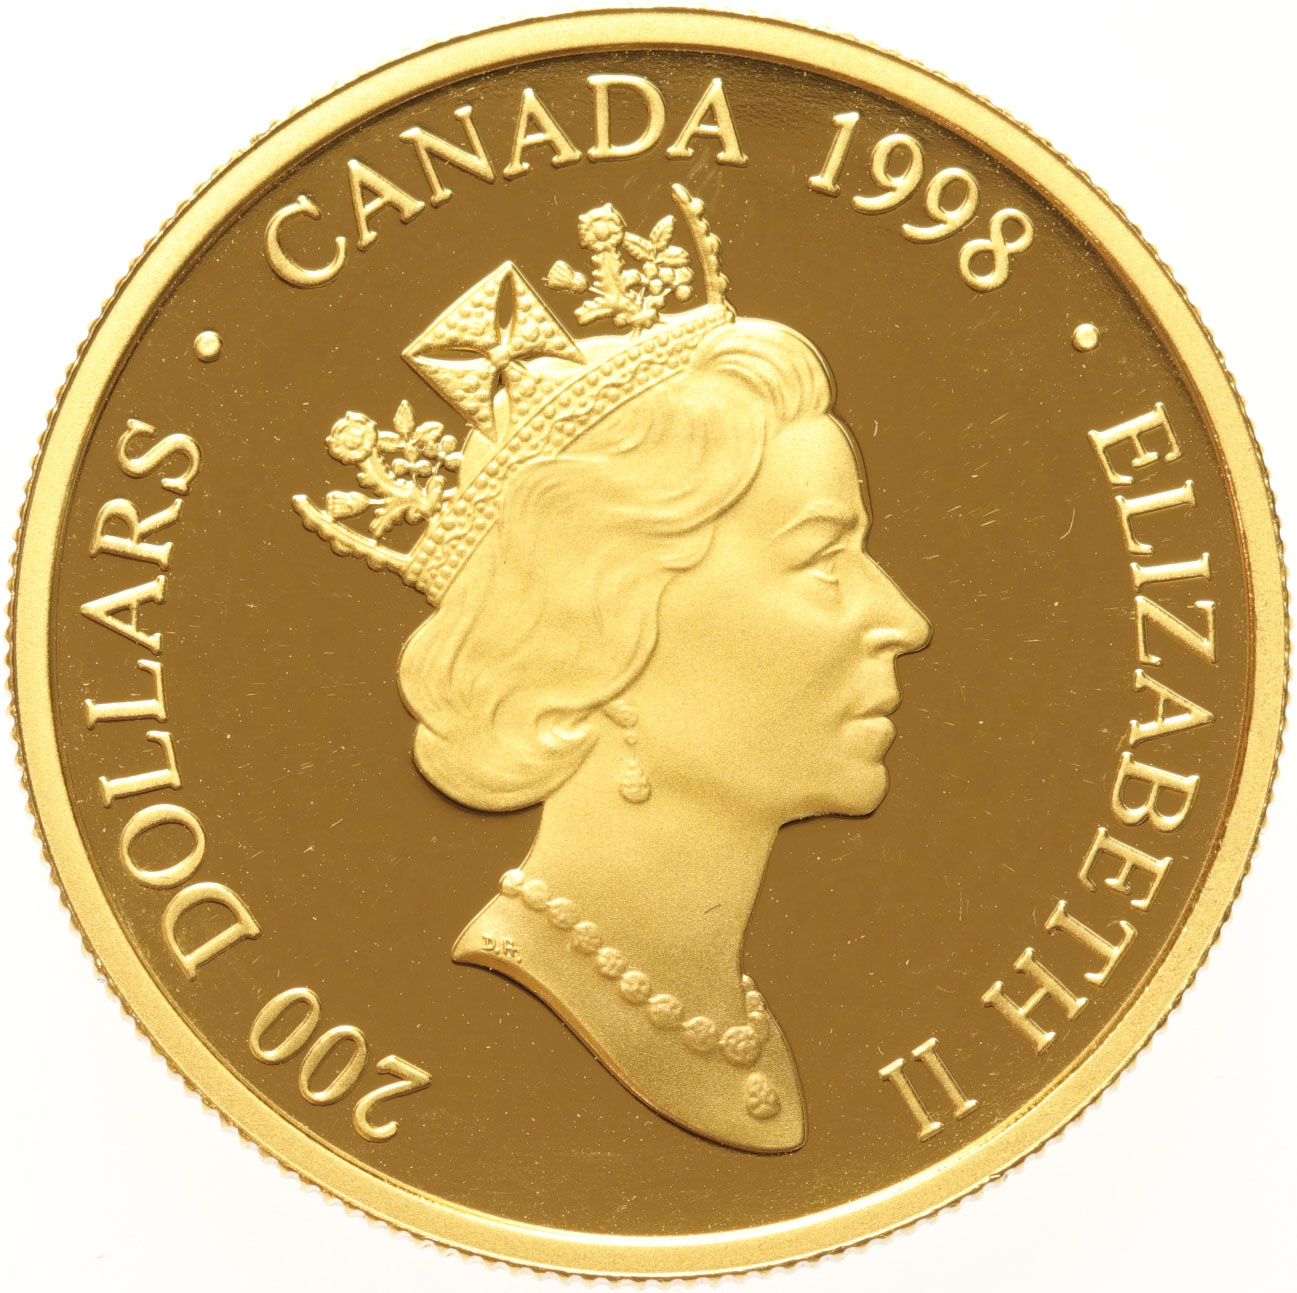 Canada 200 dollars 1998